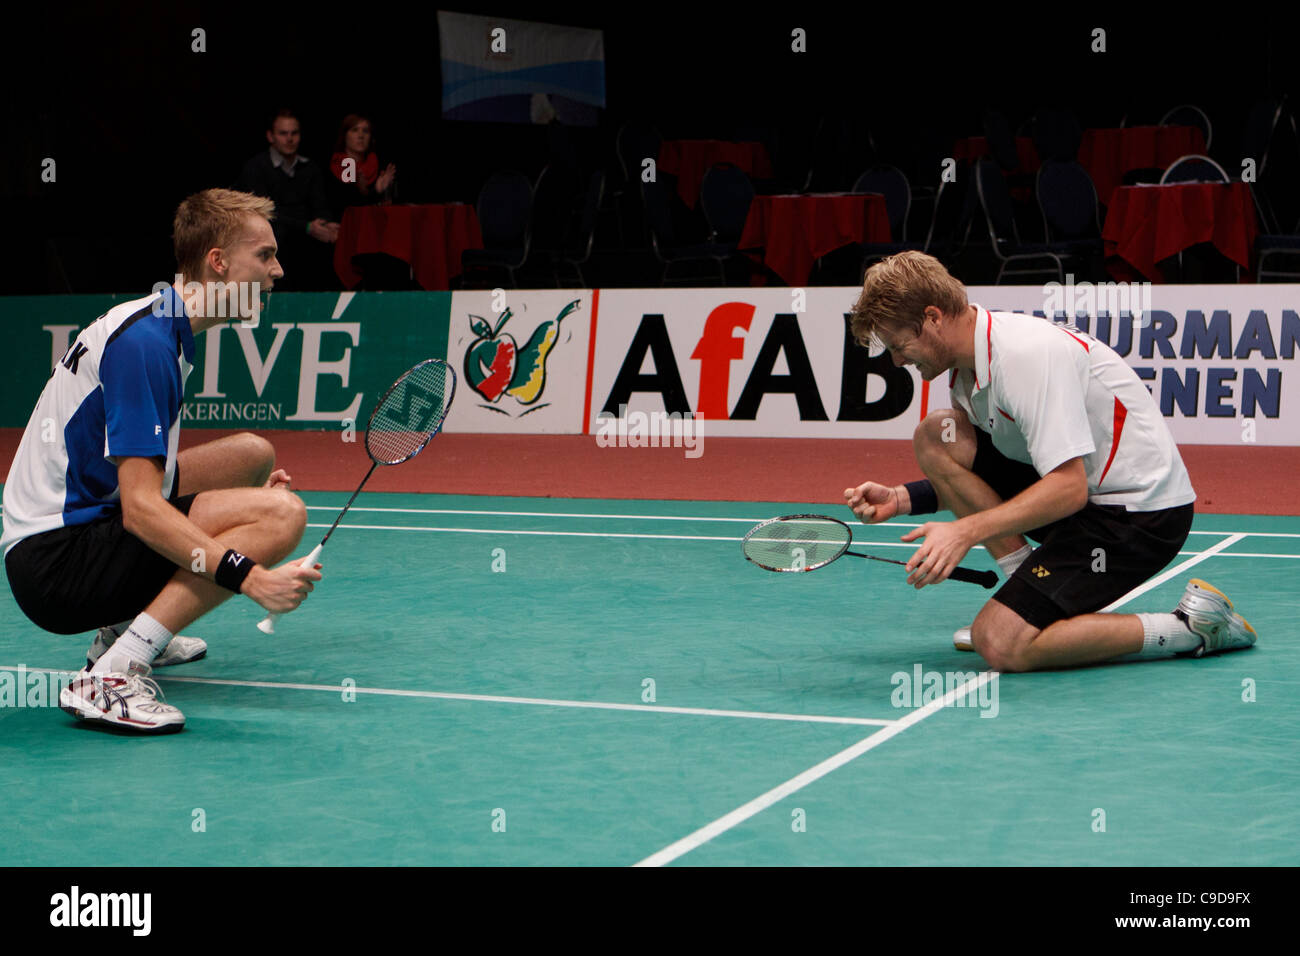 Badminton players Mads Pieler Kolding (left) and Christian John Skovgaard (right) from Denmark celebrate Stock Photo